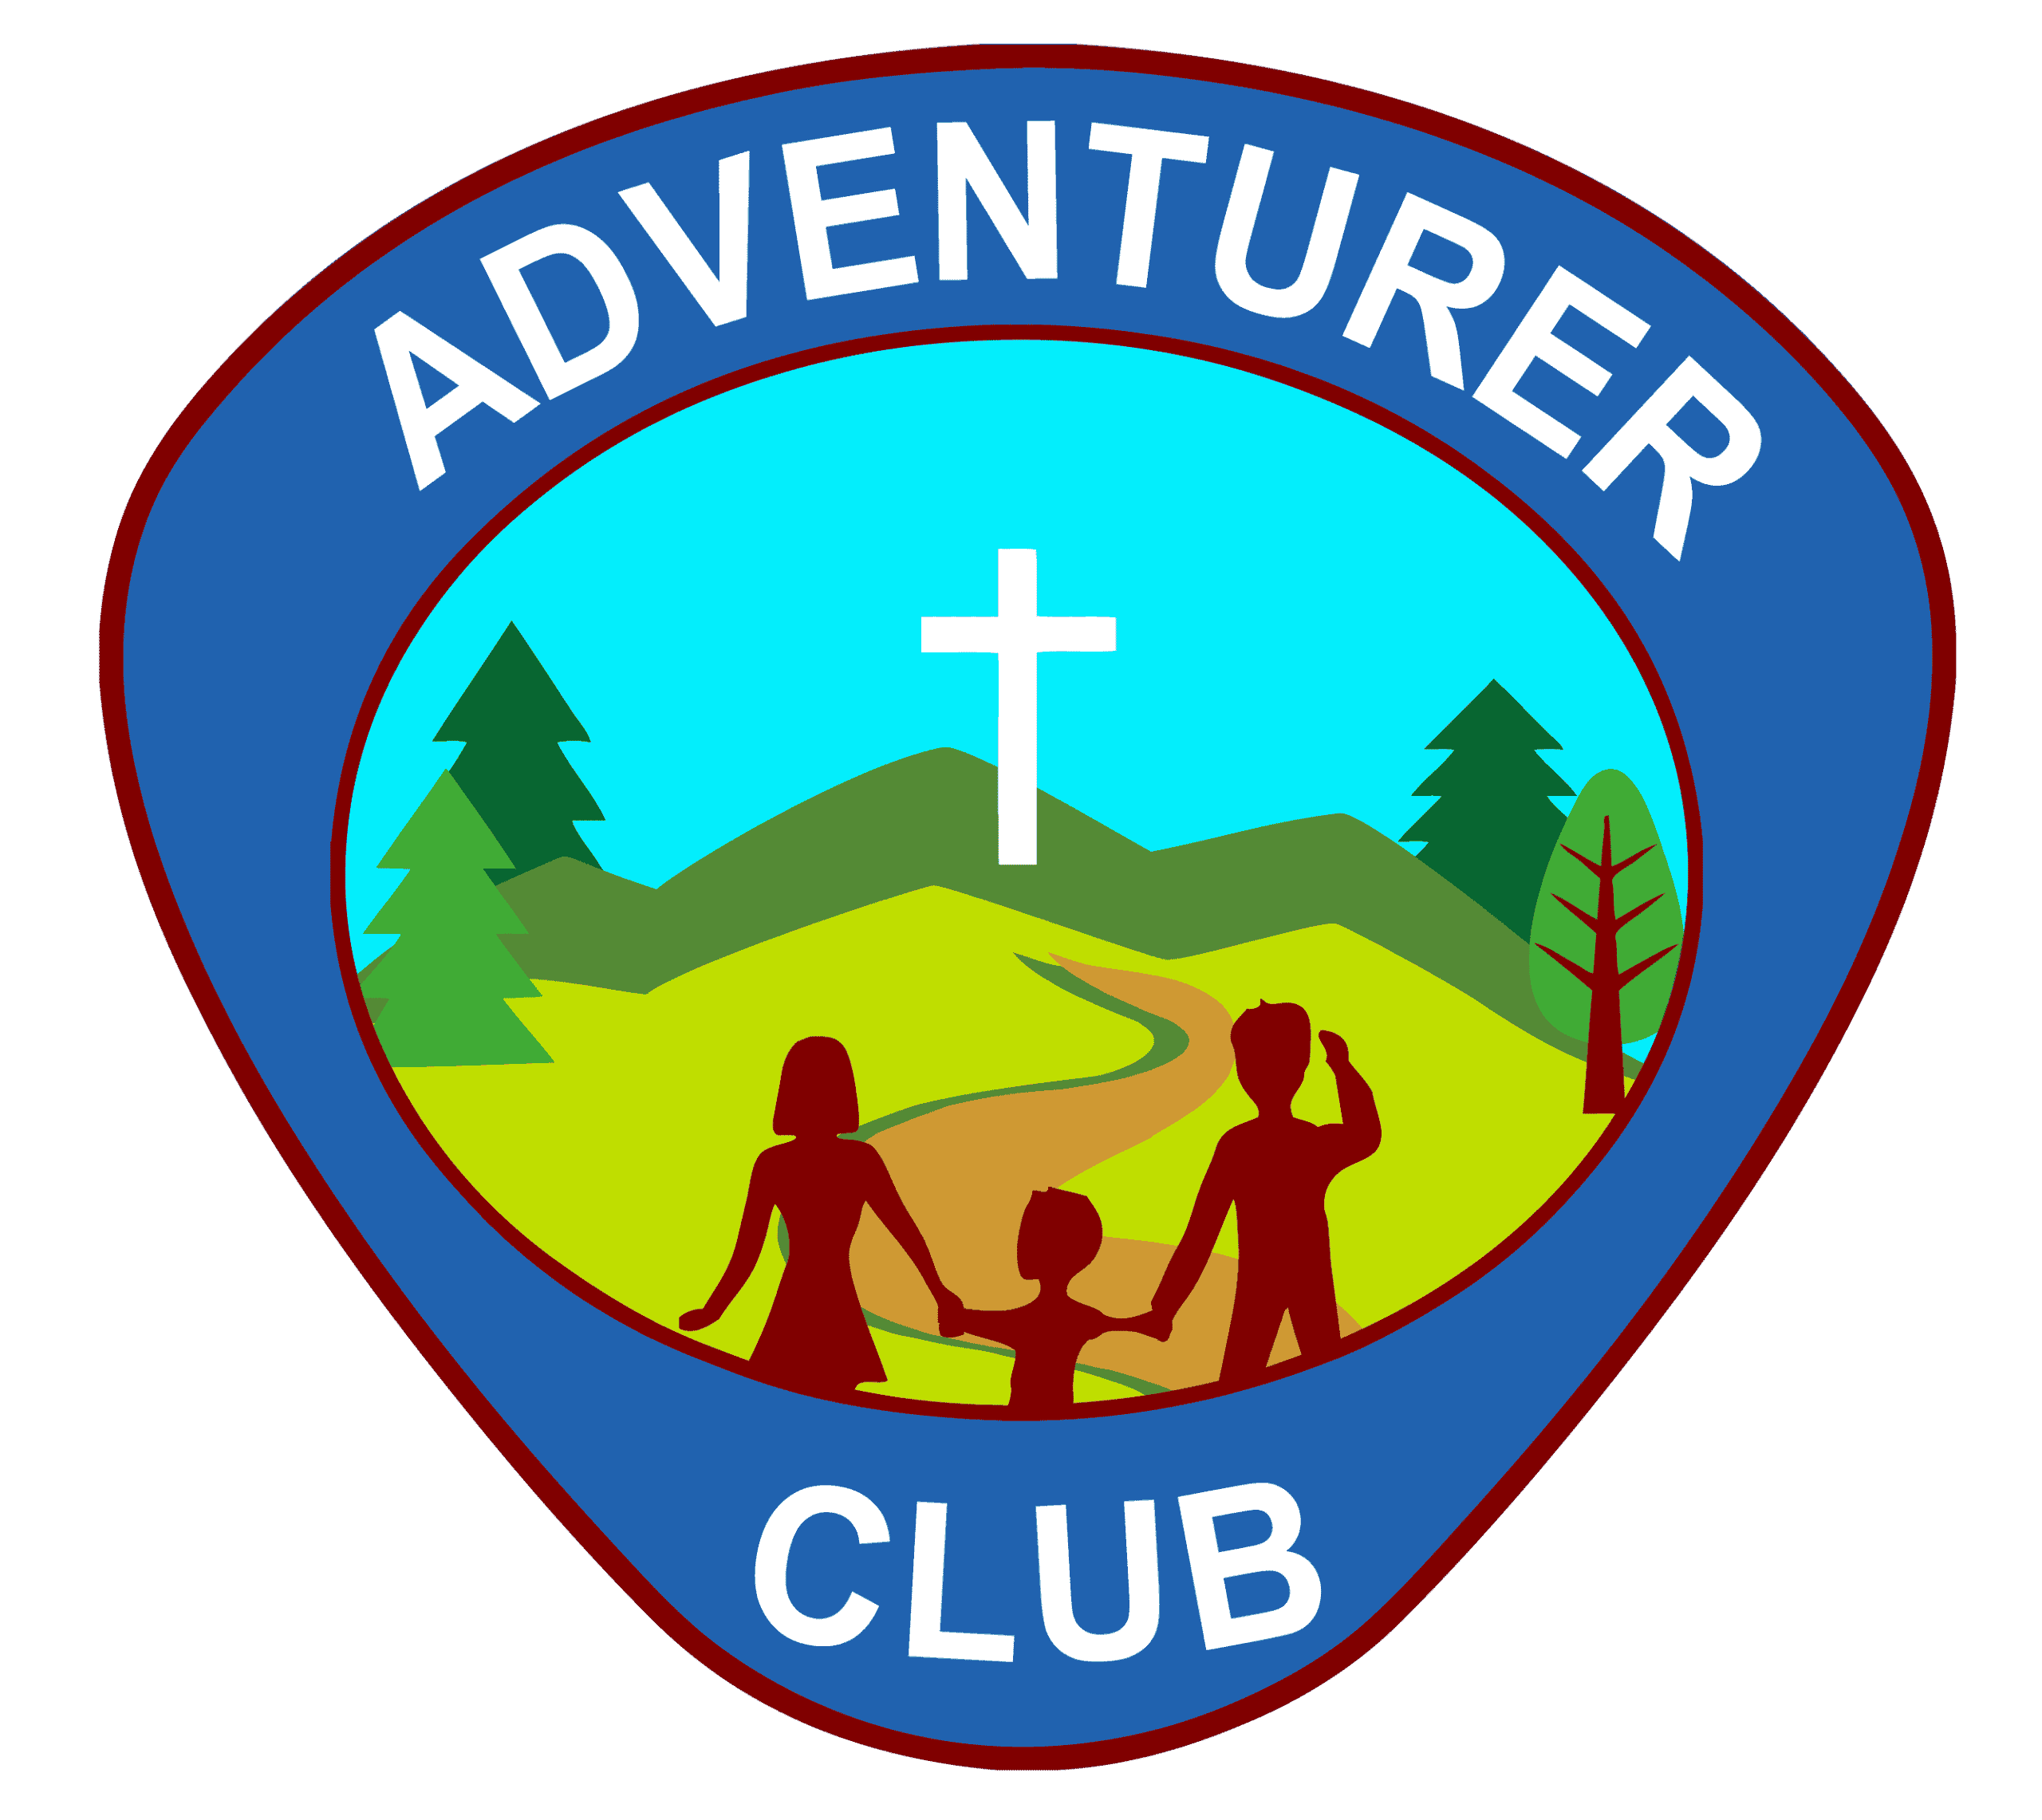 original seventh day adventist logo